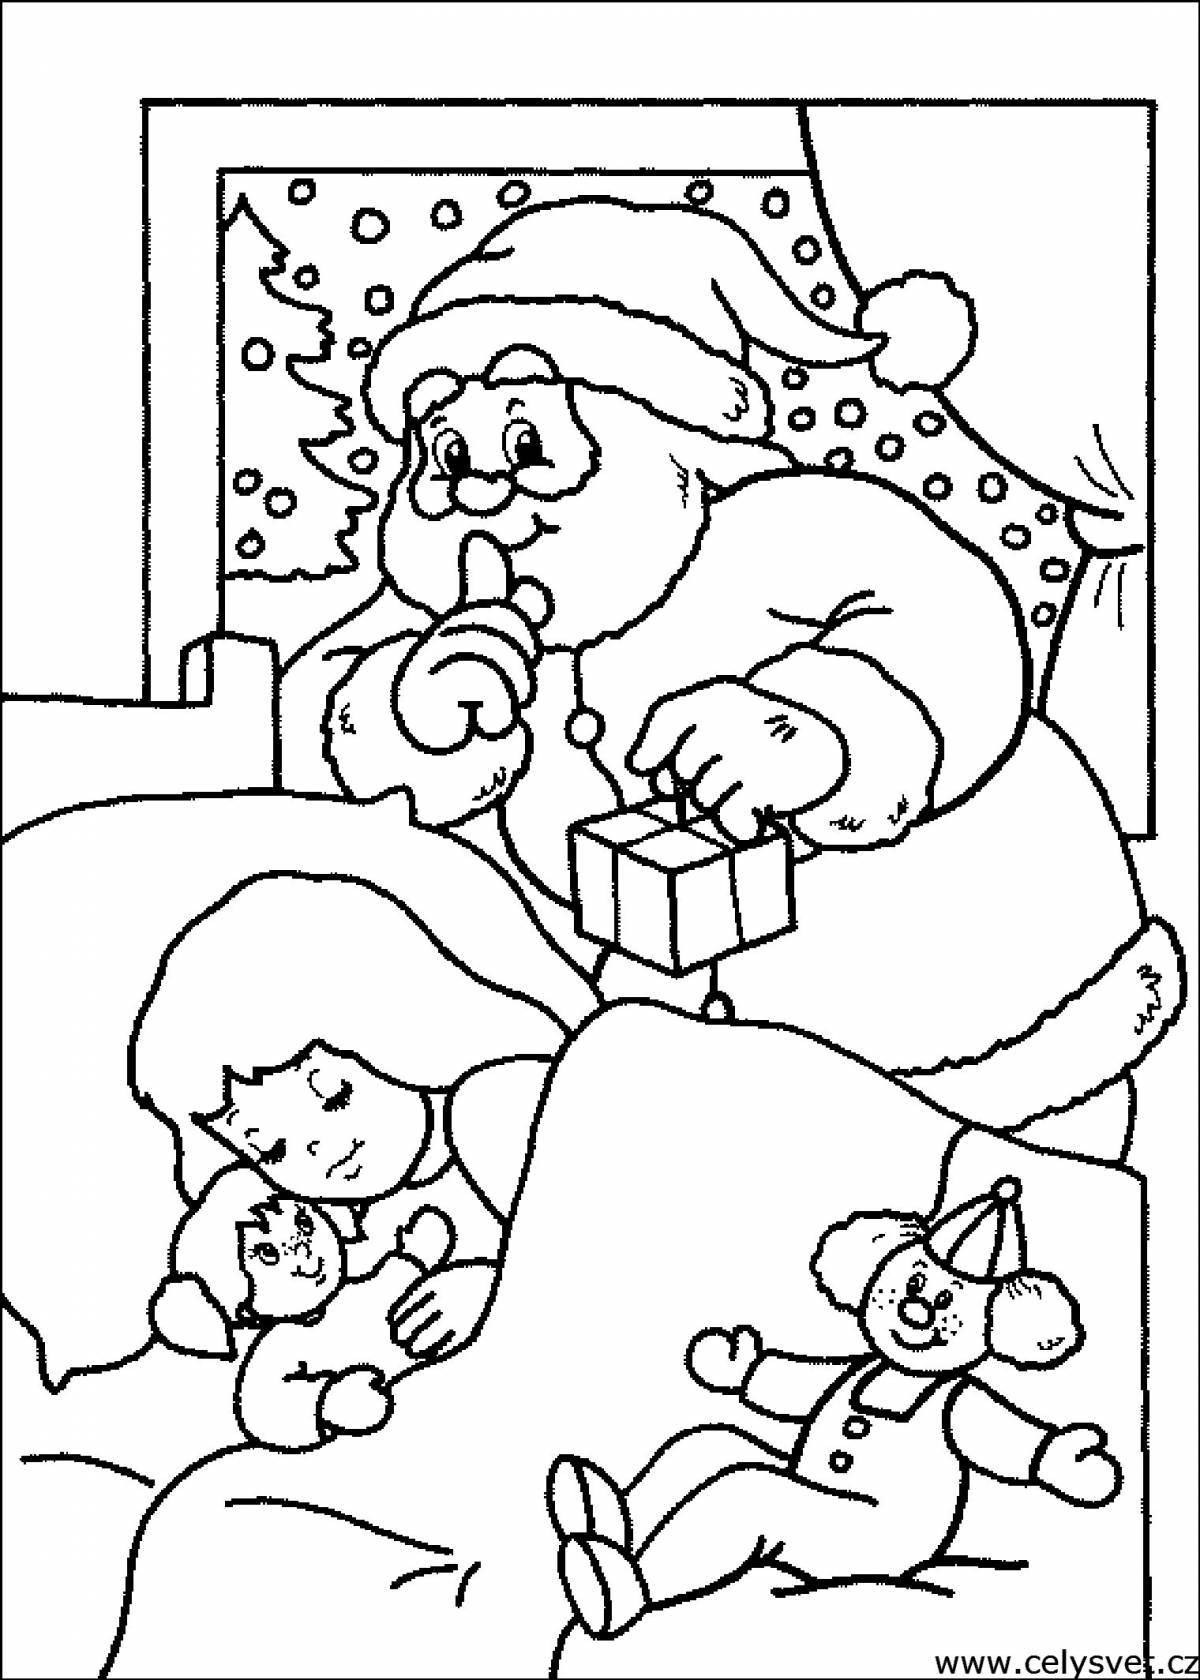 Shining Christmas story coloring book